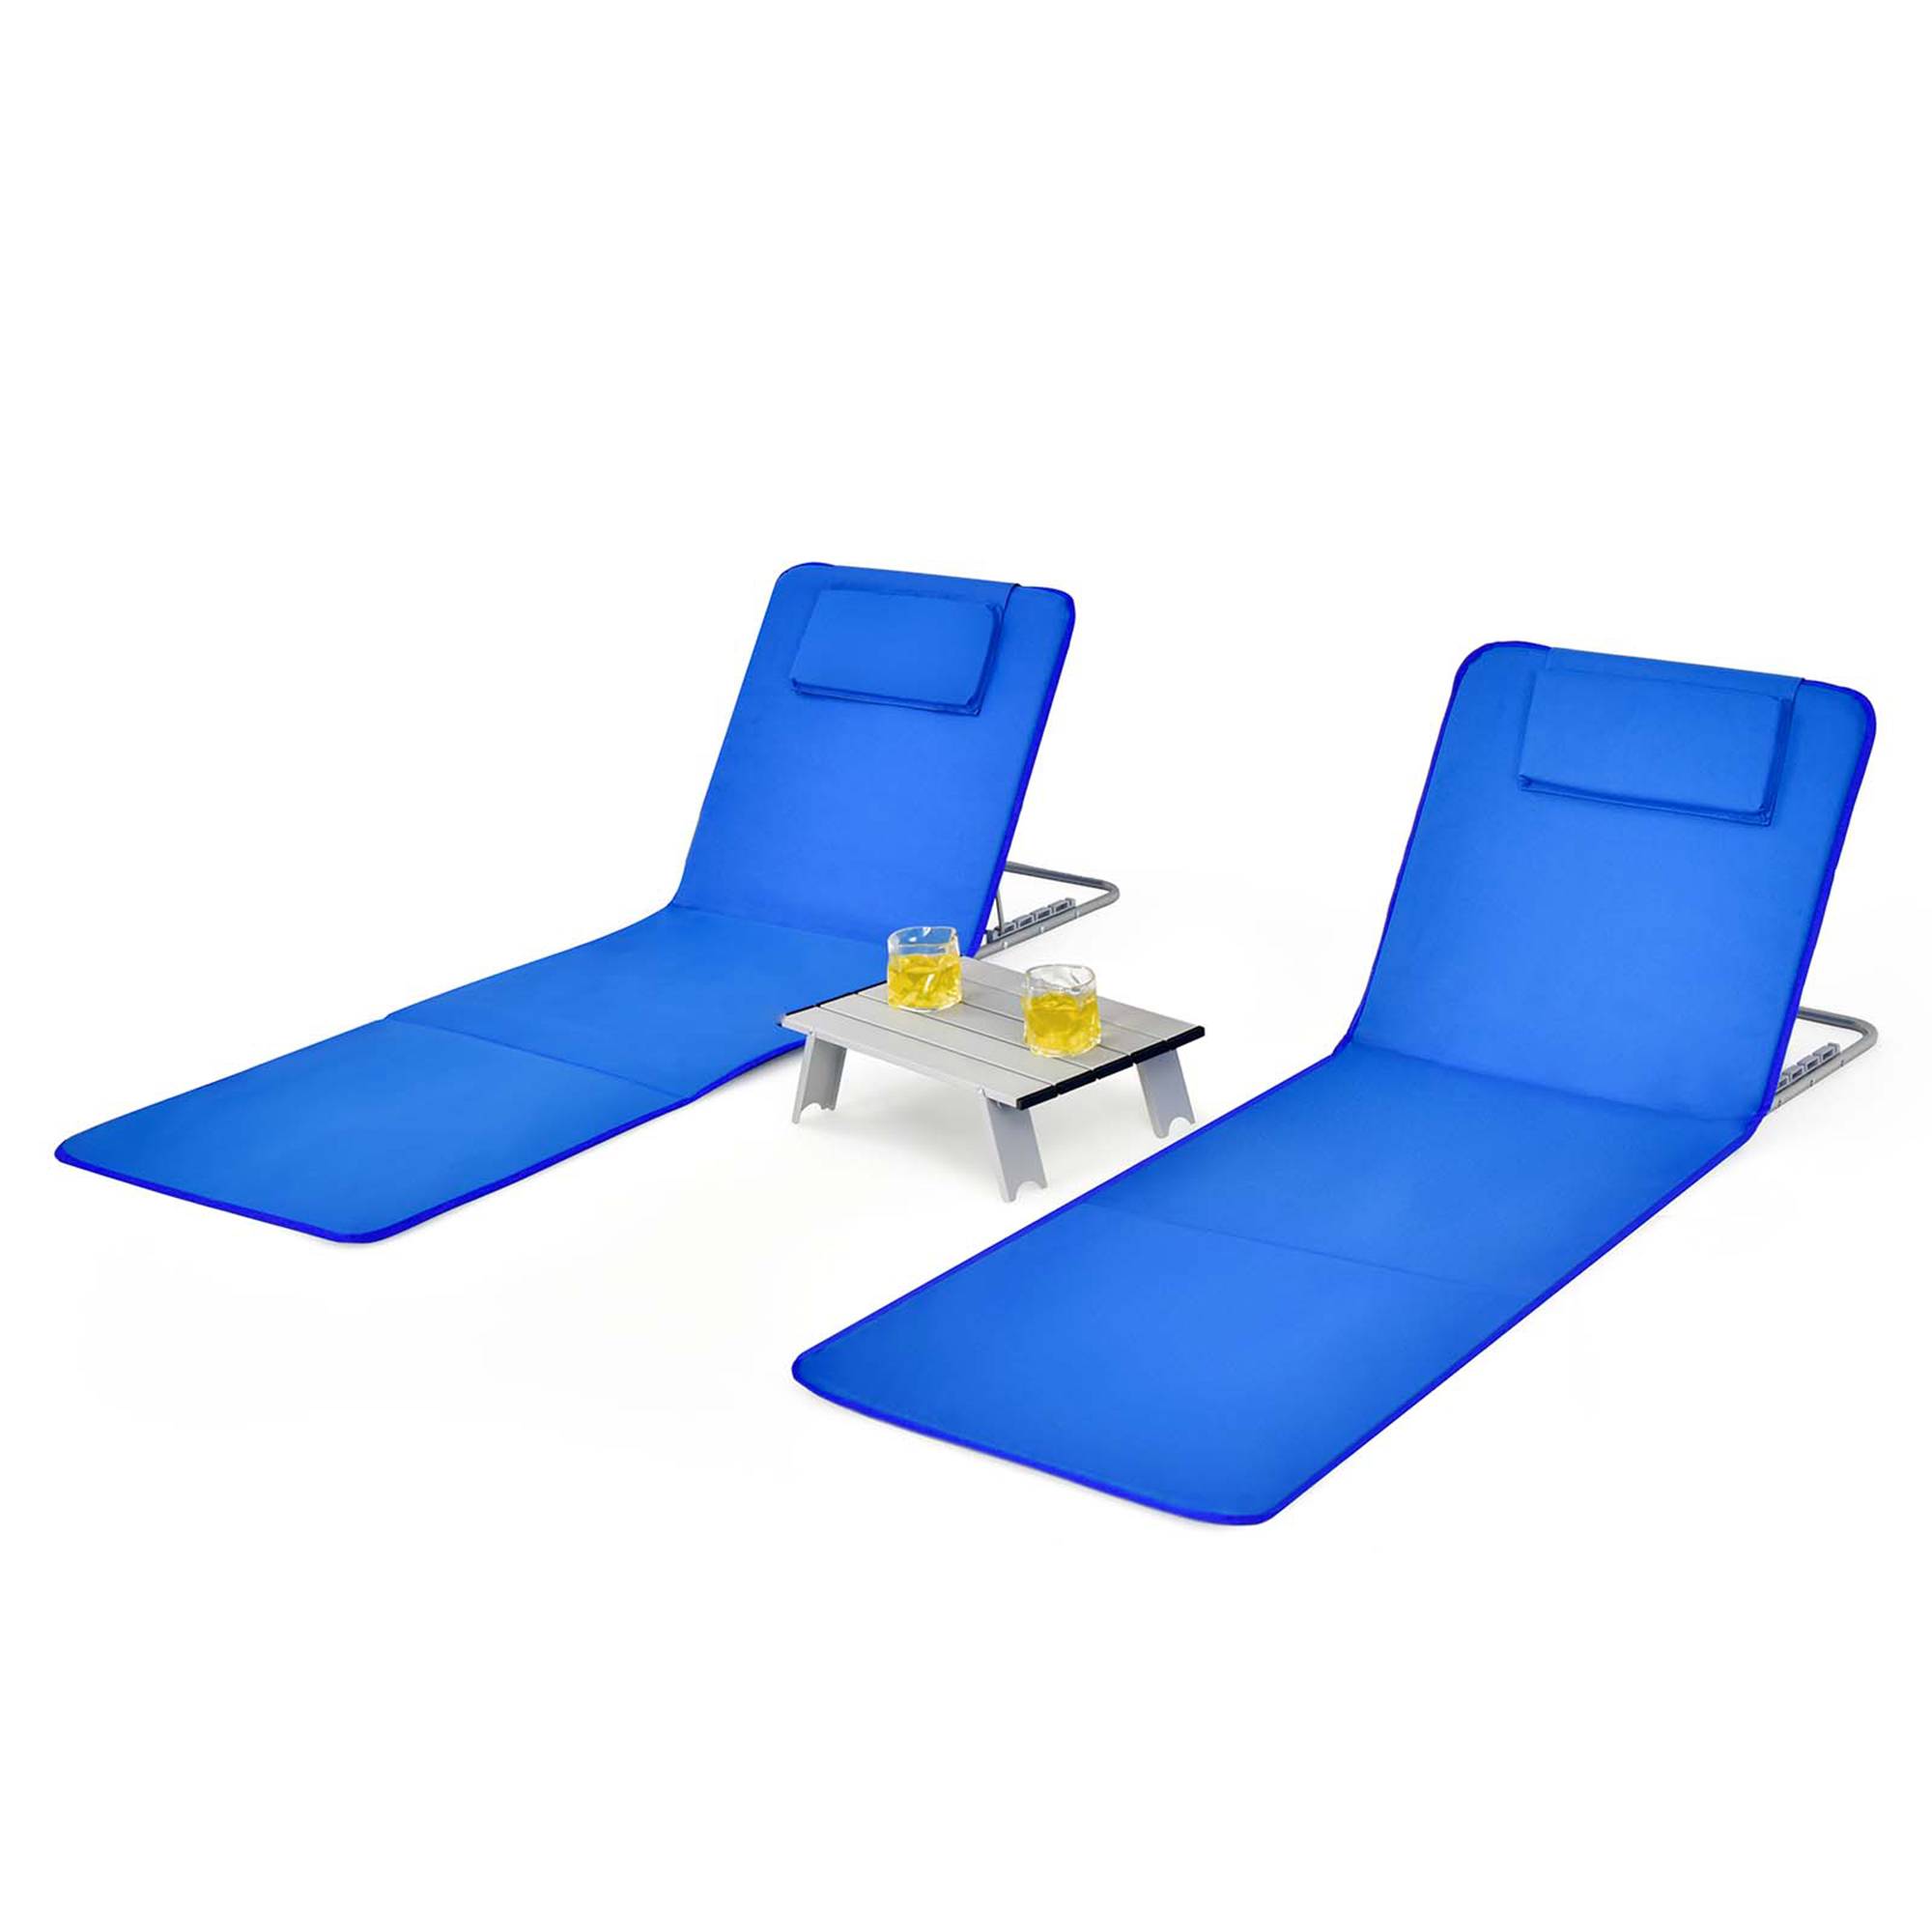 Gymax 3PCS Folding Beach Mat Set Adjustable Beach Lounge Chair & Side Table Set Blue - image 1 of 10